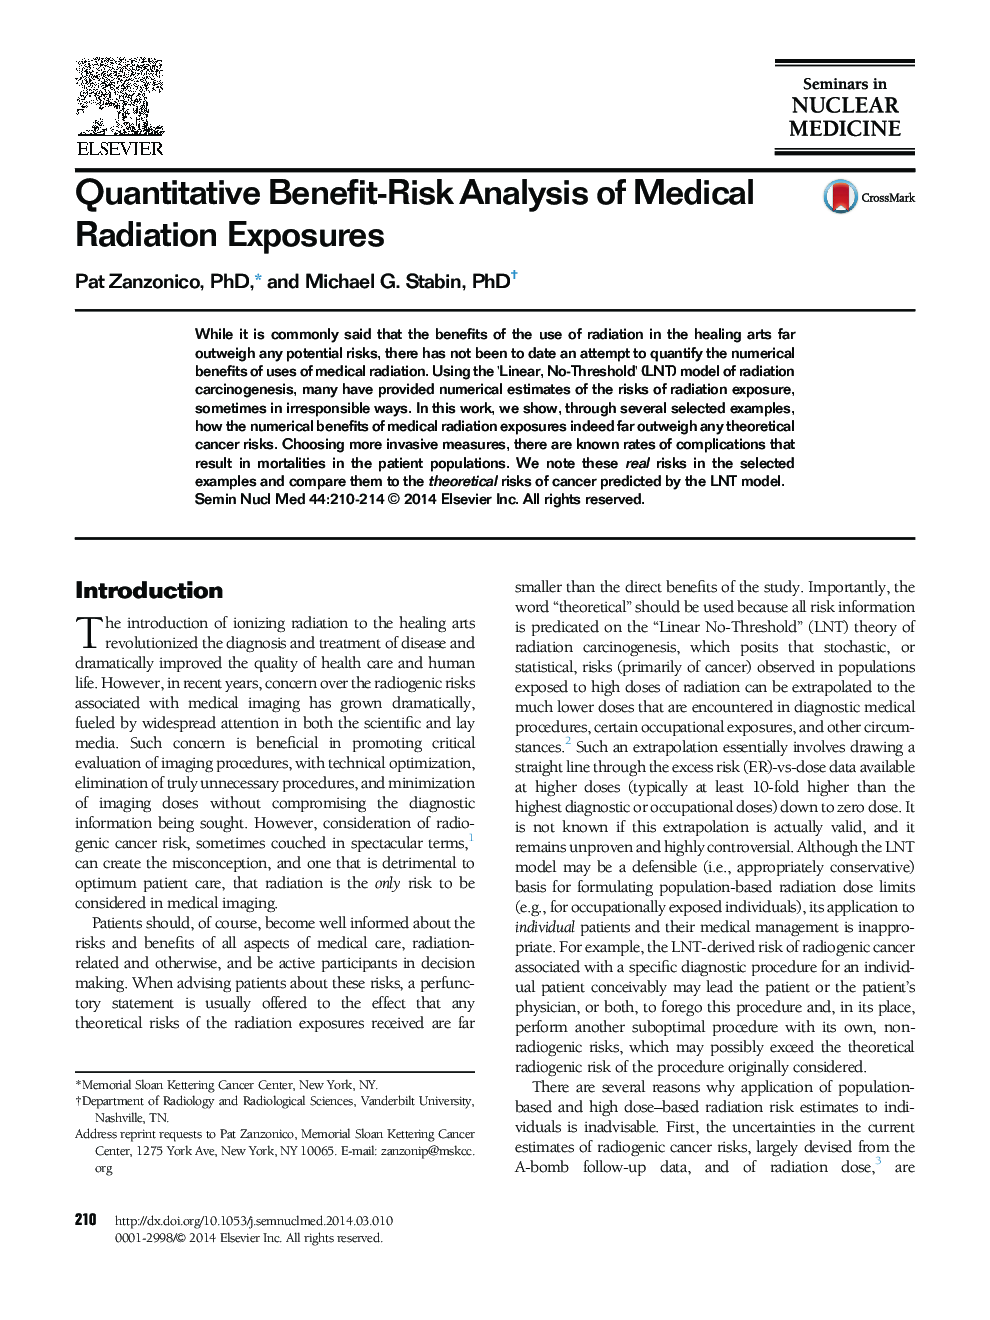 Quantitative Benefit-Risk Analysis of Medical Radiation Exposures